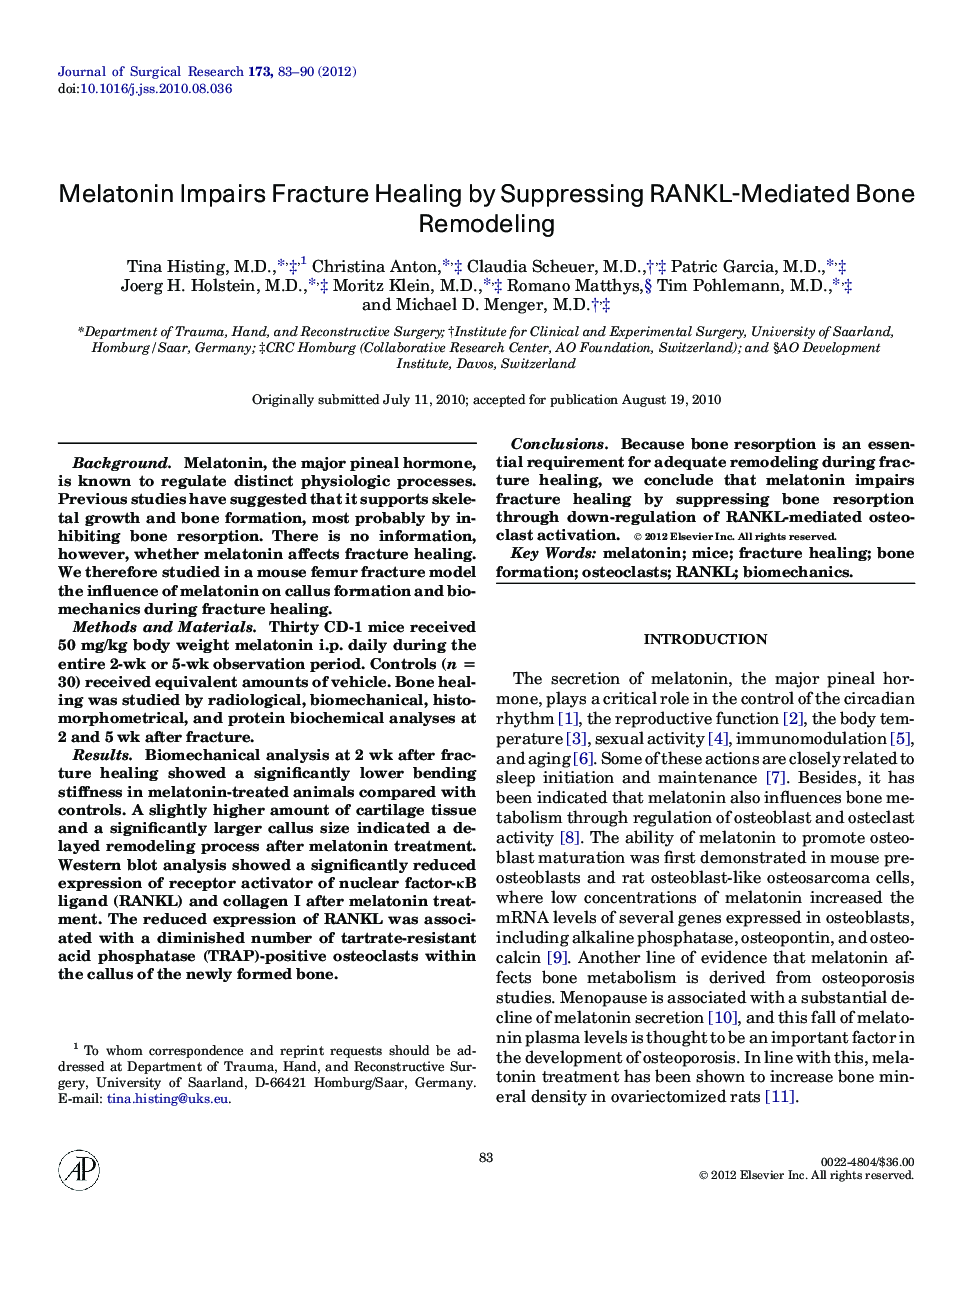 Melatonin Impairs Fracture Healing by Suppressing RANKL-Mediated Bone Remodeling